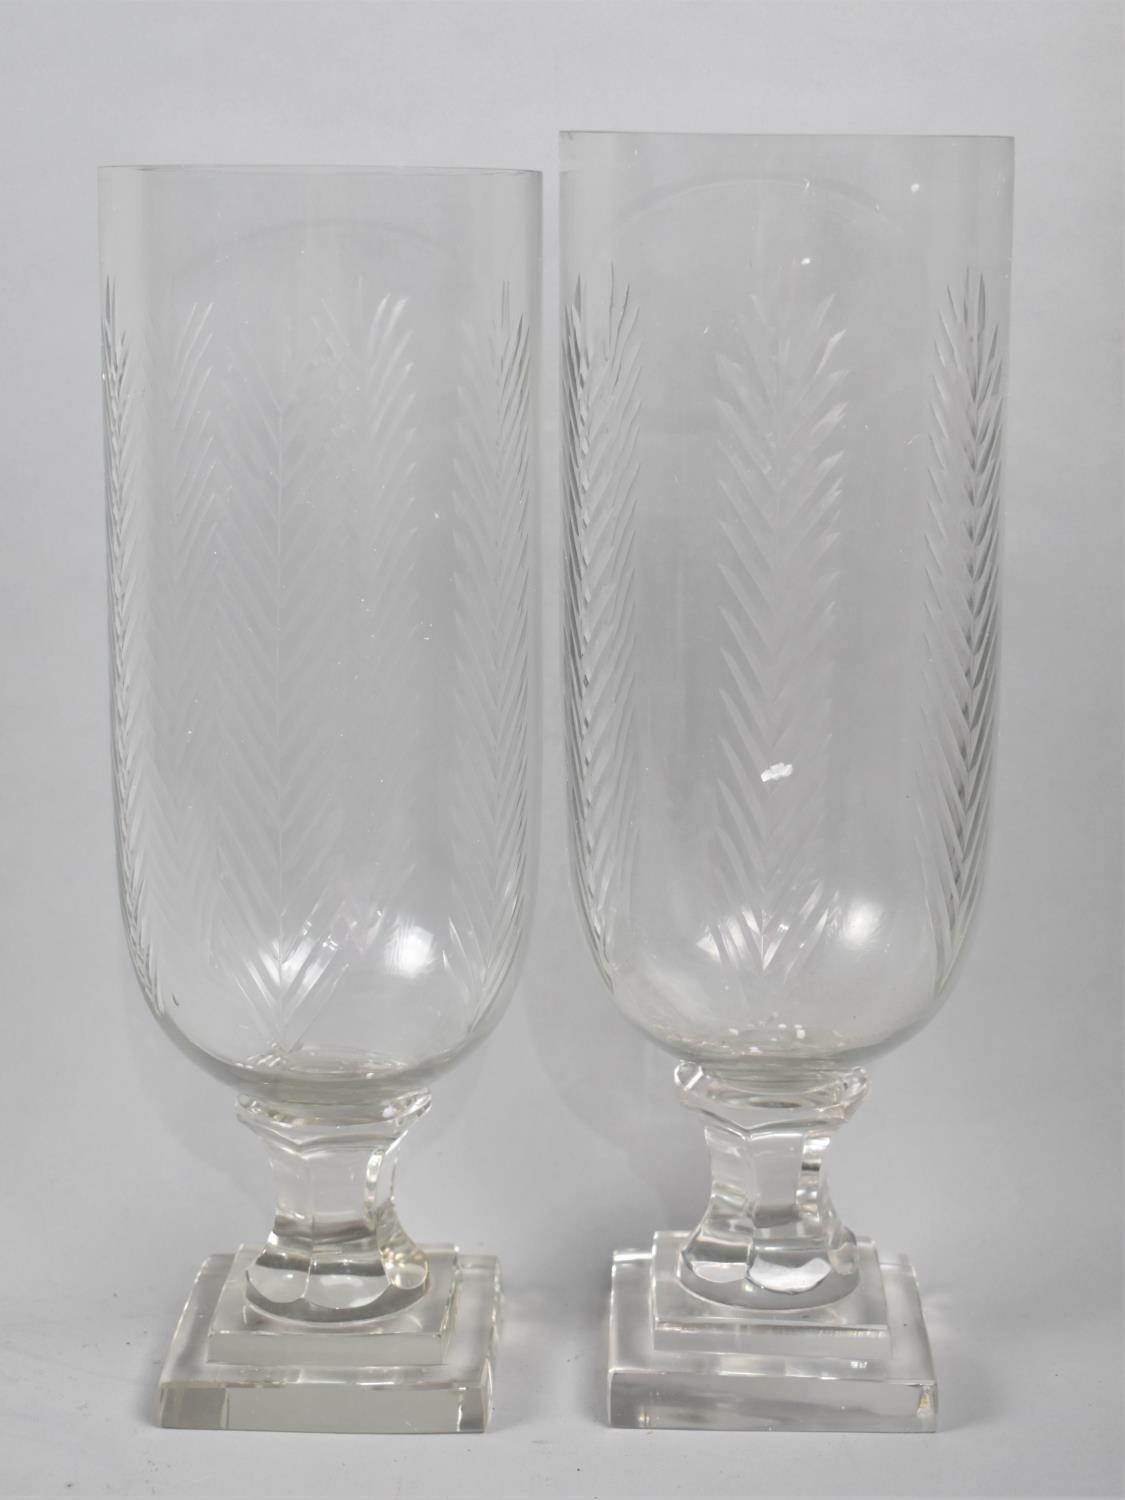 A Near Pair of Tall Cut Crystal Hurricane Glass Vases, 34.5cms High